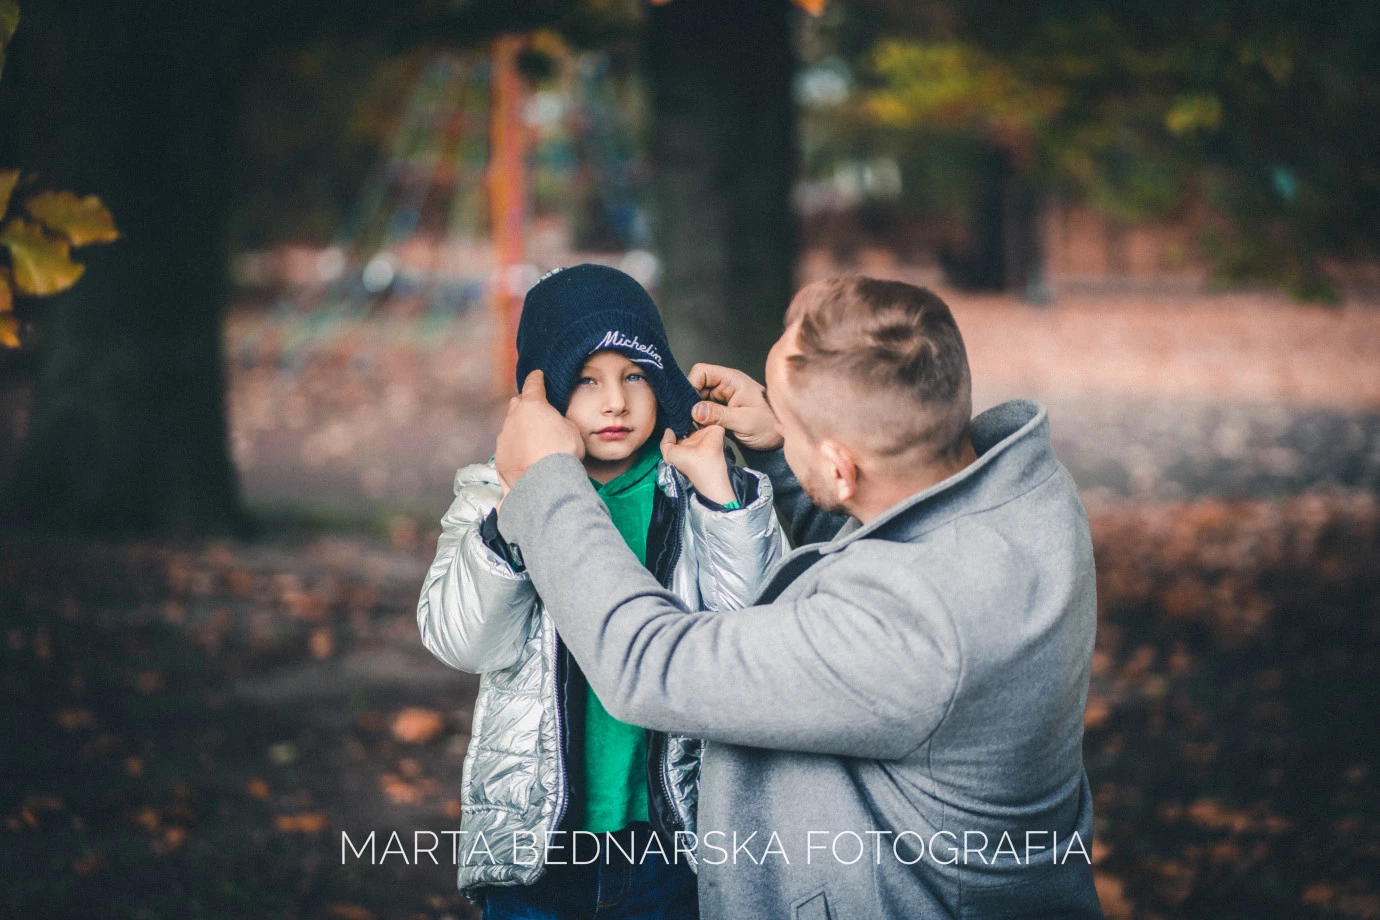 fotograf opole marta-bednarska-fotografia portfolio zdjecia rodzinne fotografia rodzinna sesja